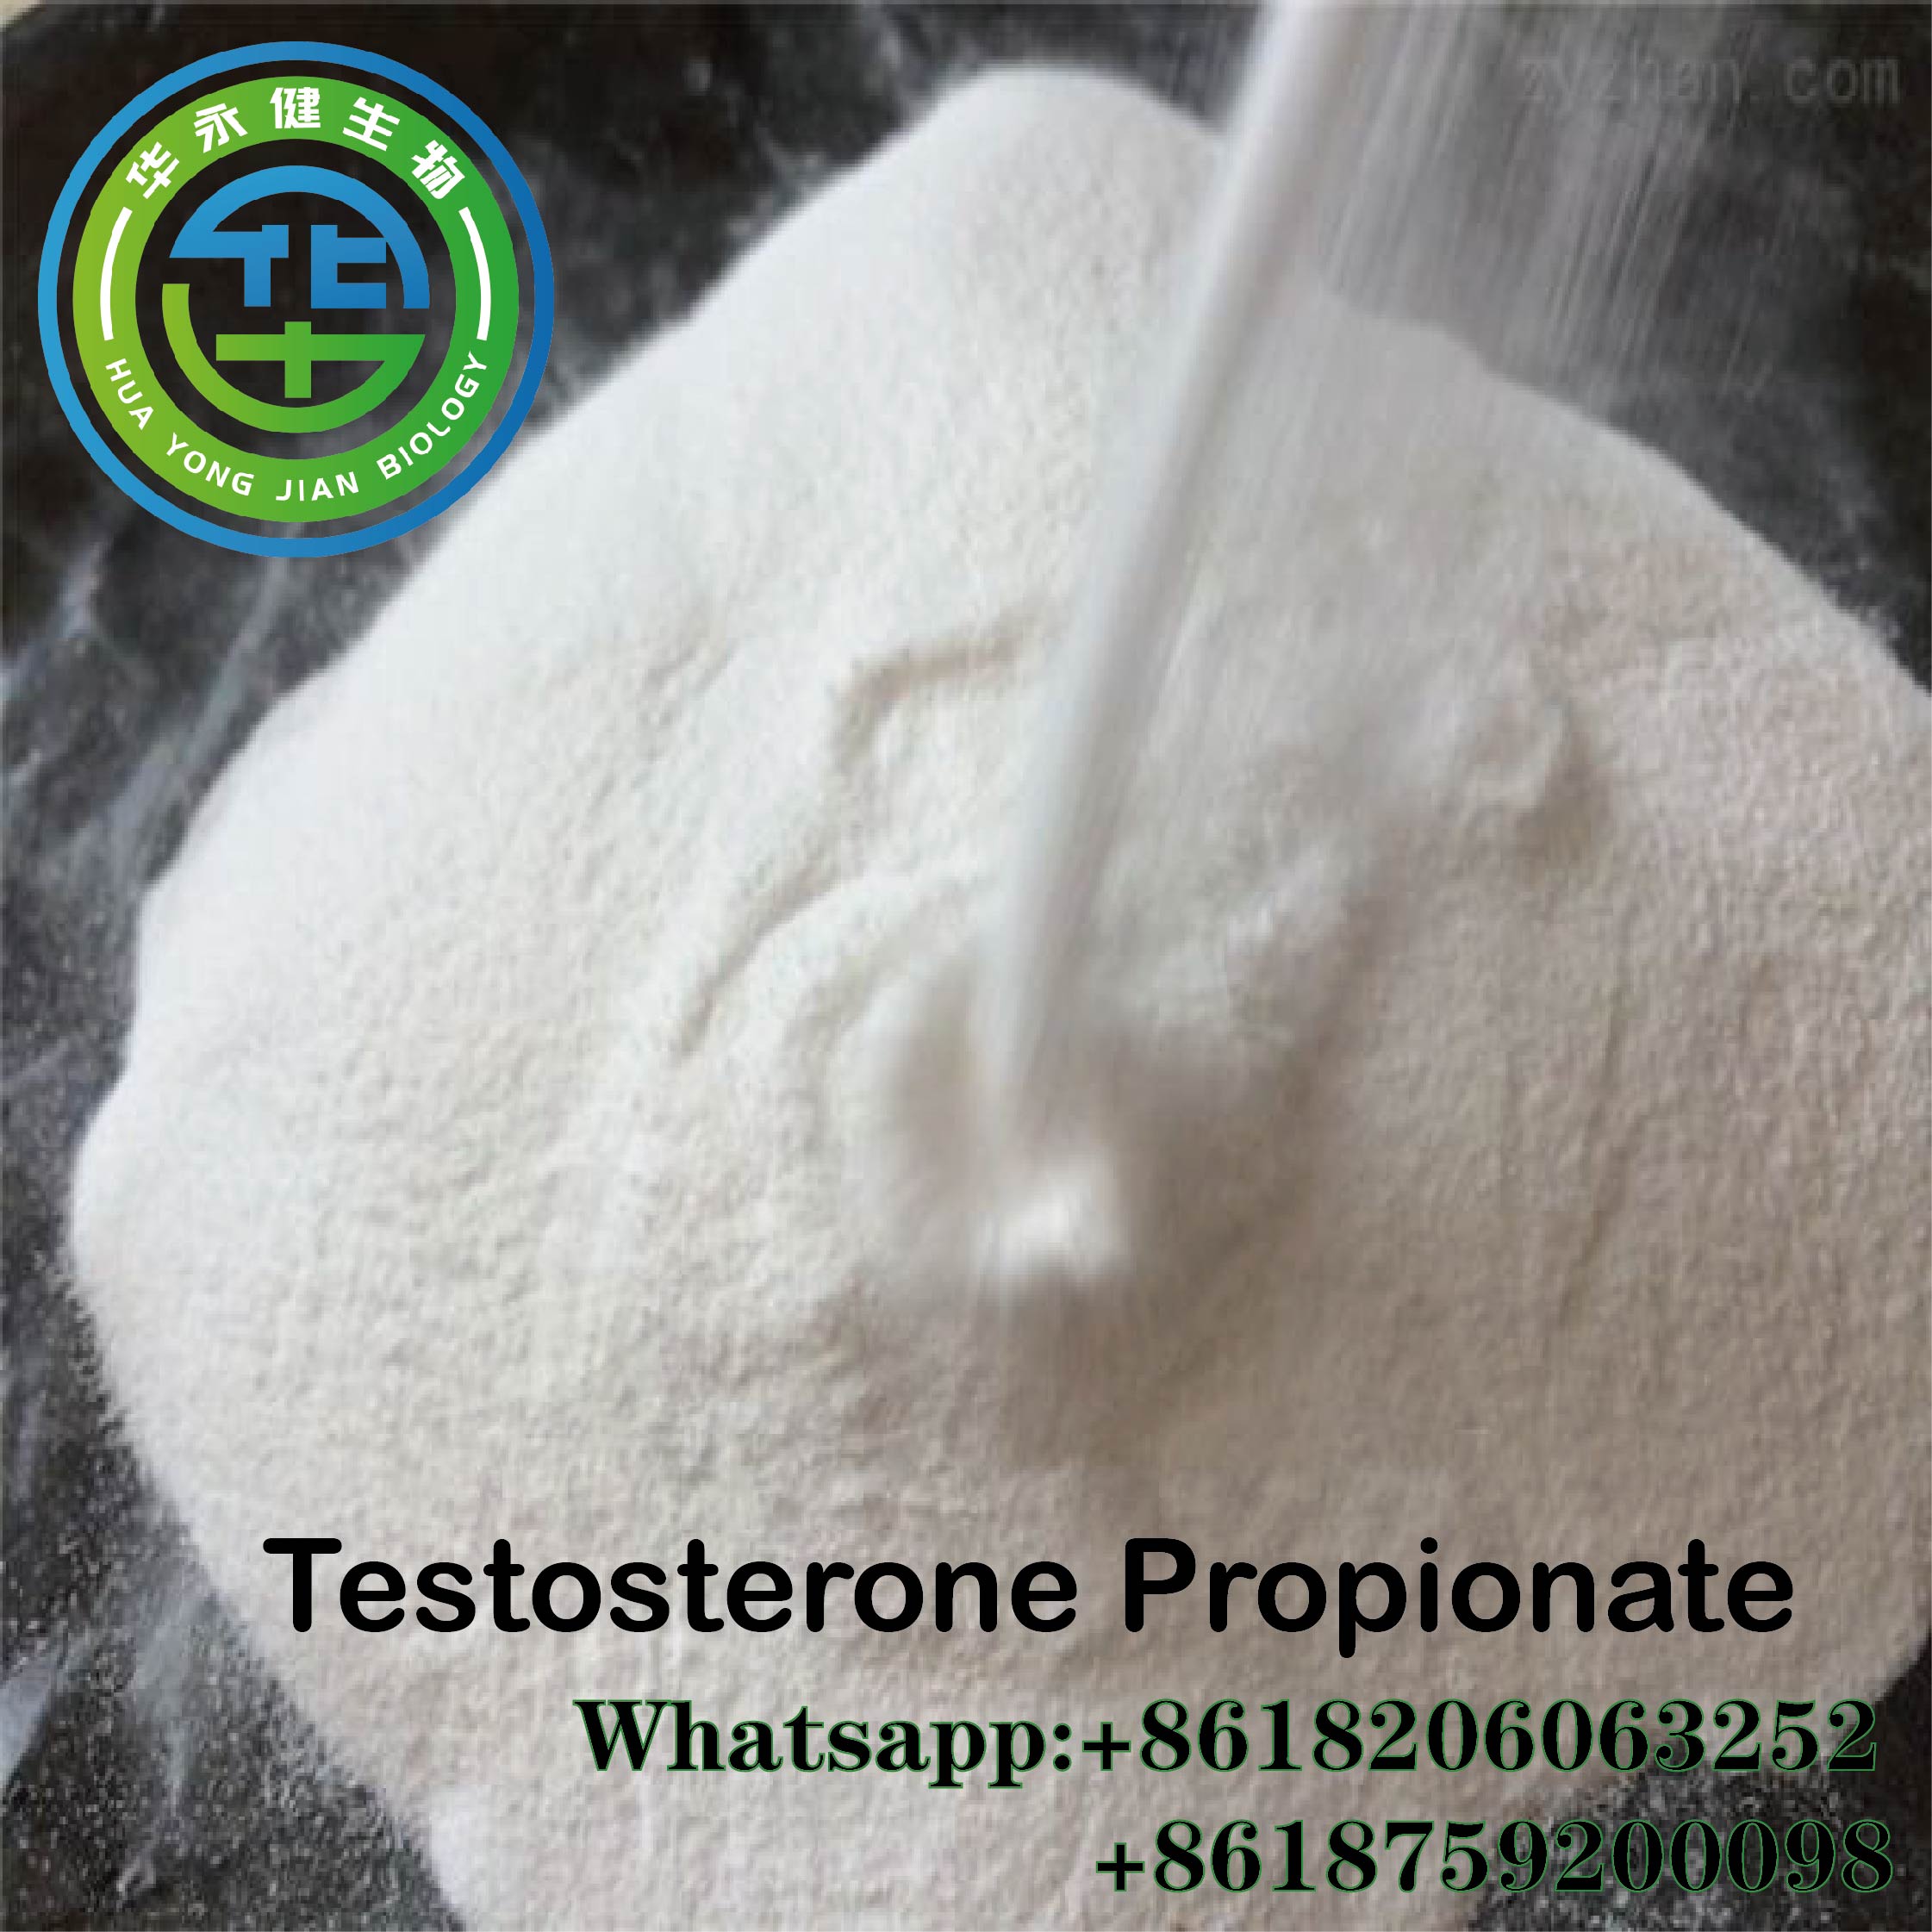 Testosterone Propionate Anabolic Hormones Bulking Stack Steroids Fat Burning Test Propionate Powder CasNO.57-85-2